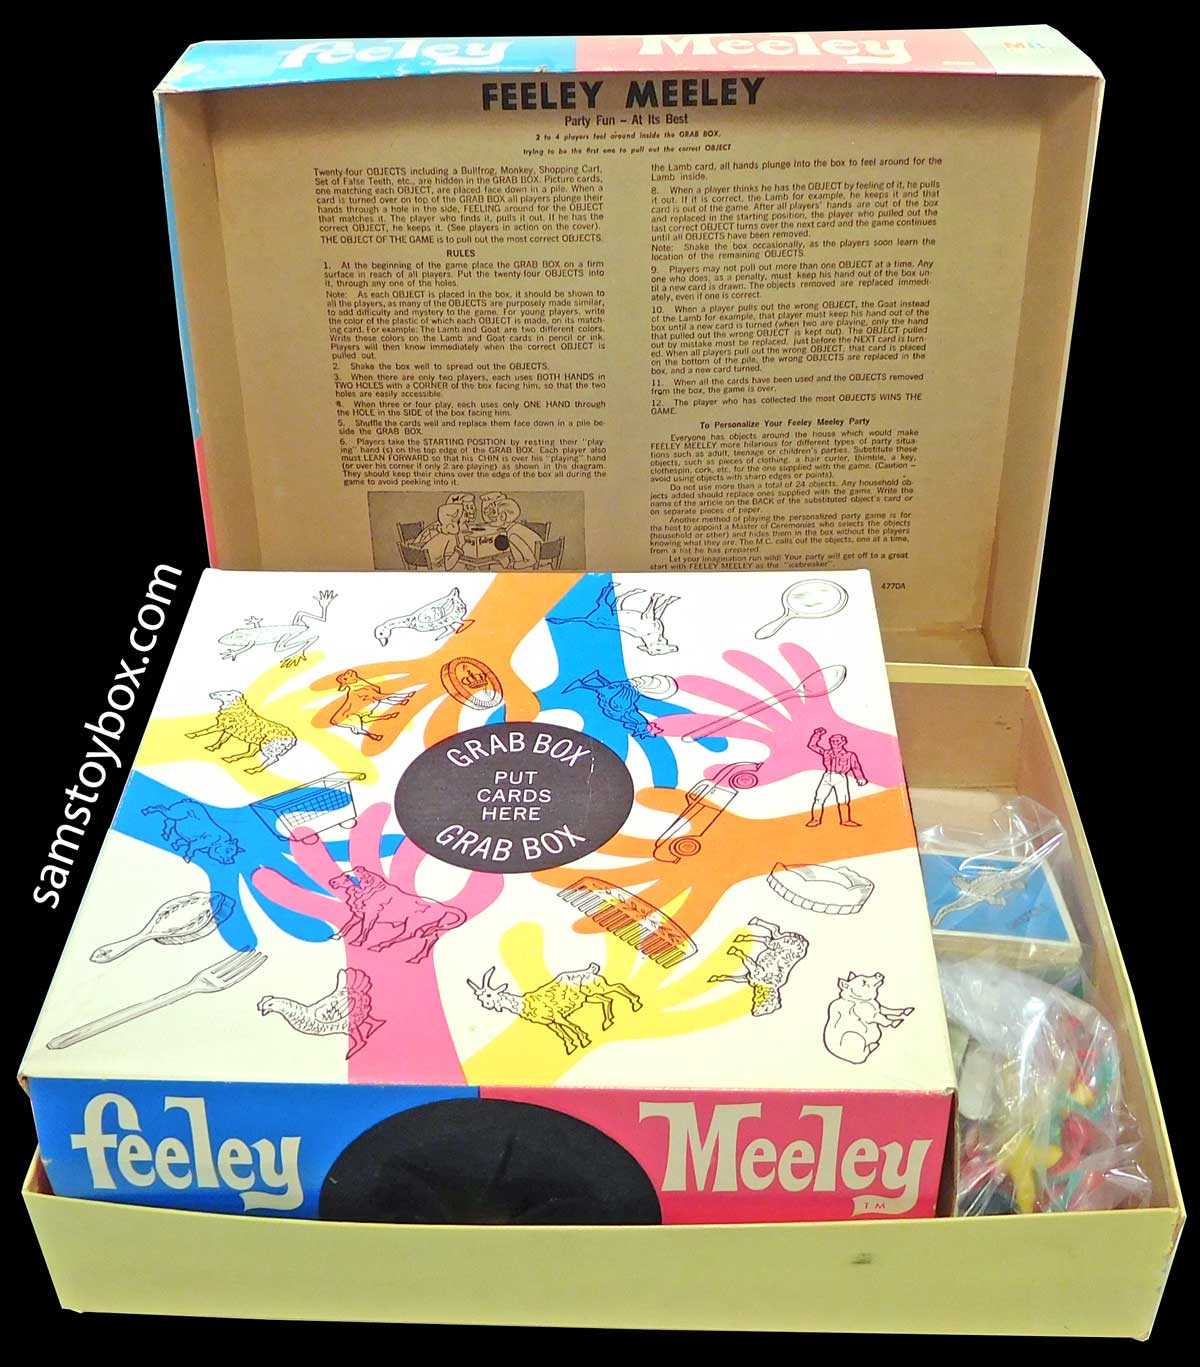 Feeley Meeley Game Open Box